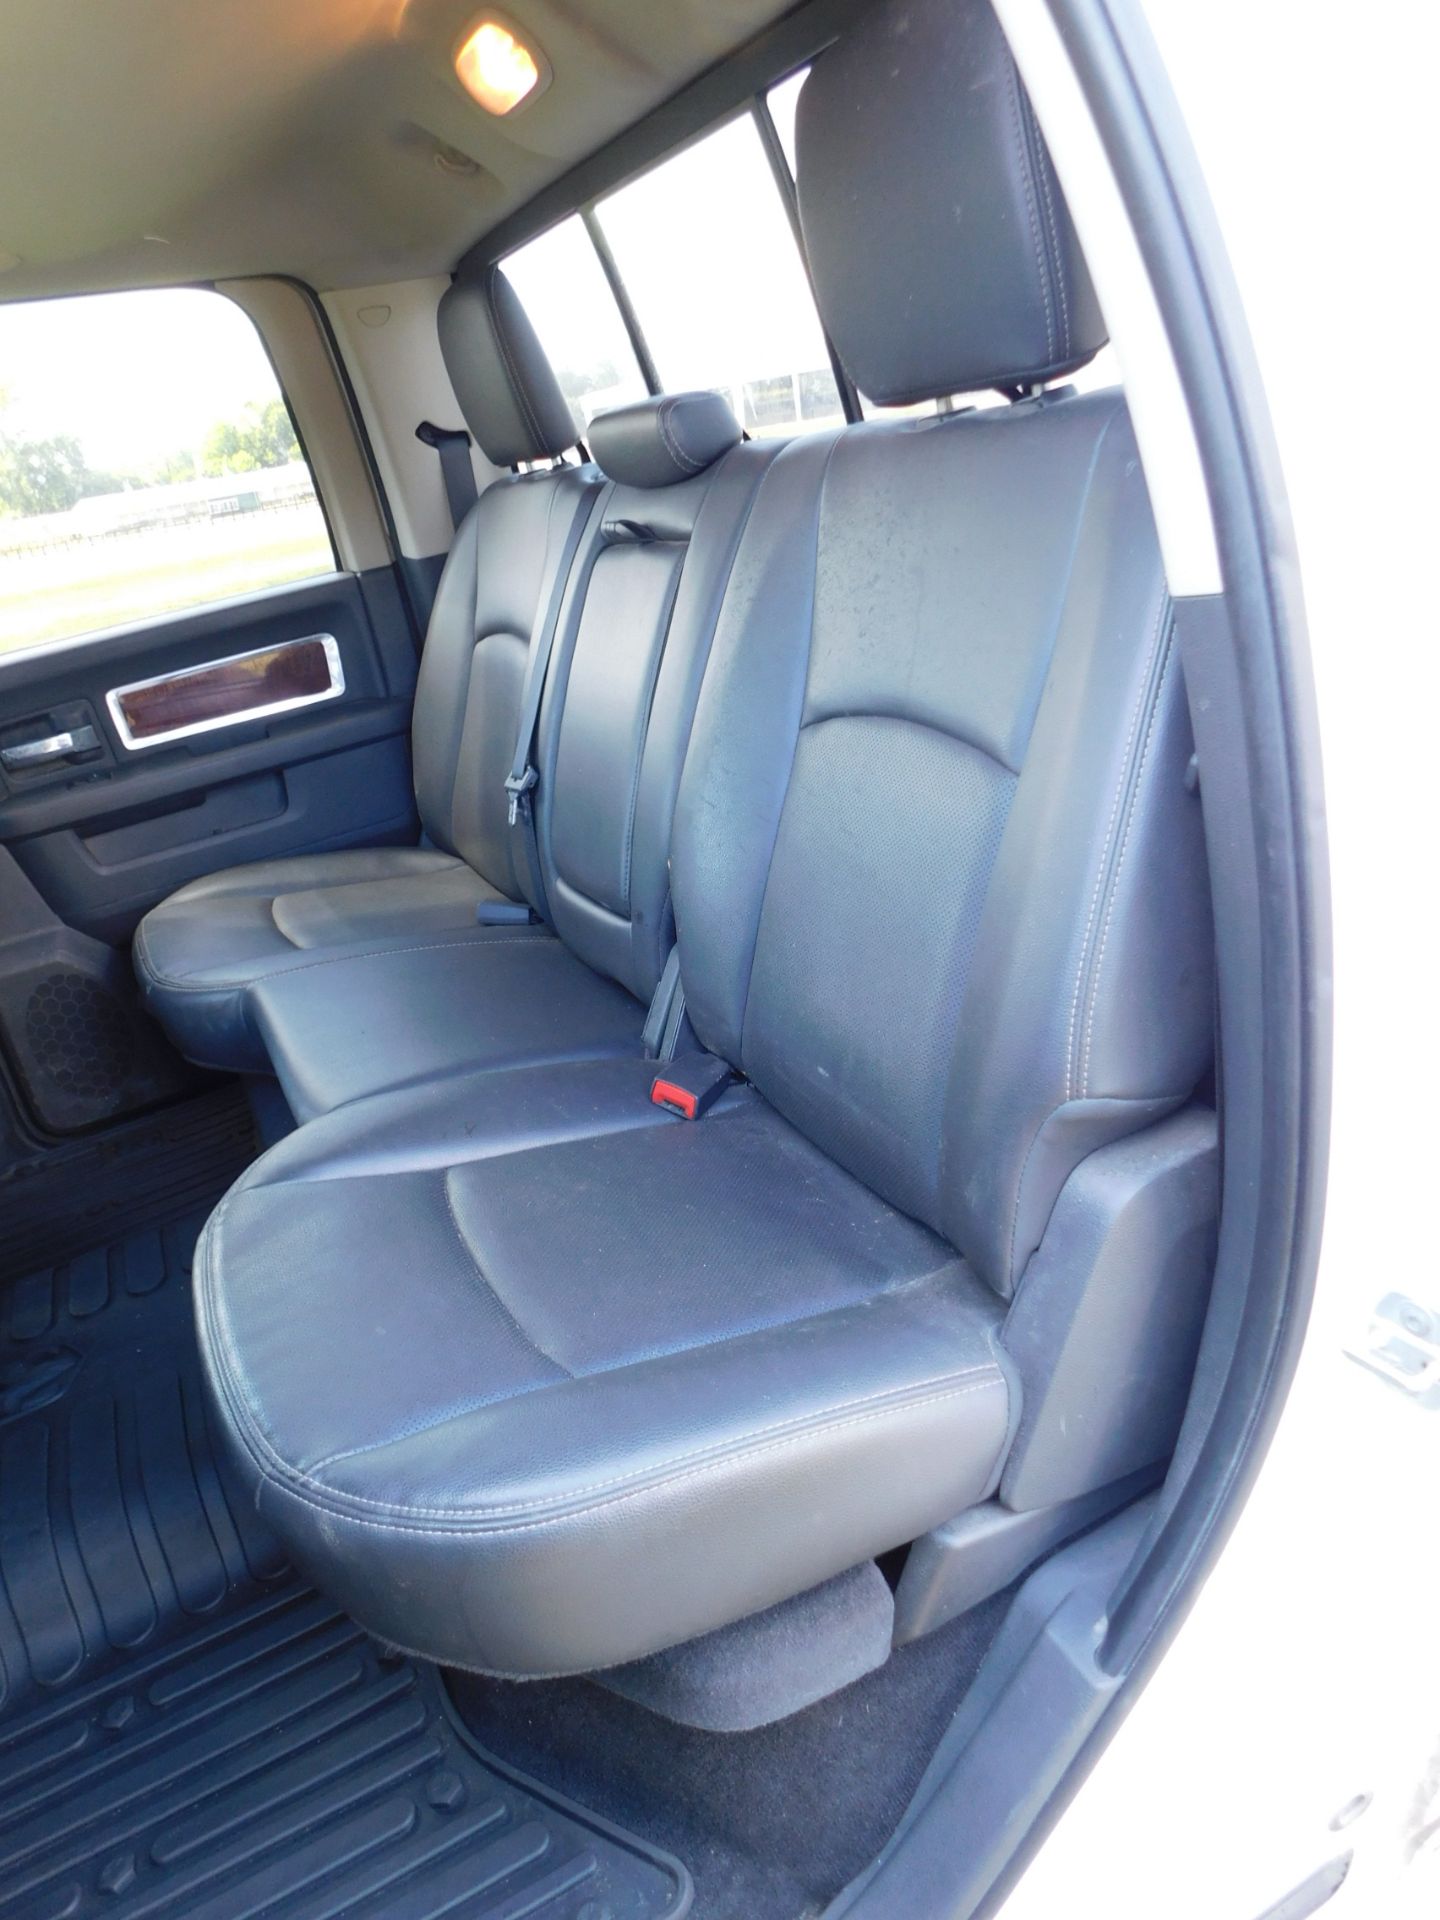 2012 Dodge Ram 1500 Pickup, Crew Cab, 6' Bed, Automatic, 4 WD, AM/FM,AC, PL, PW, Hemi 5.7 L - Image 35 of 53